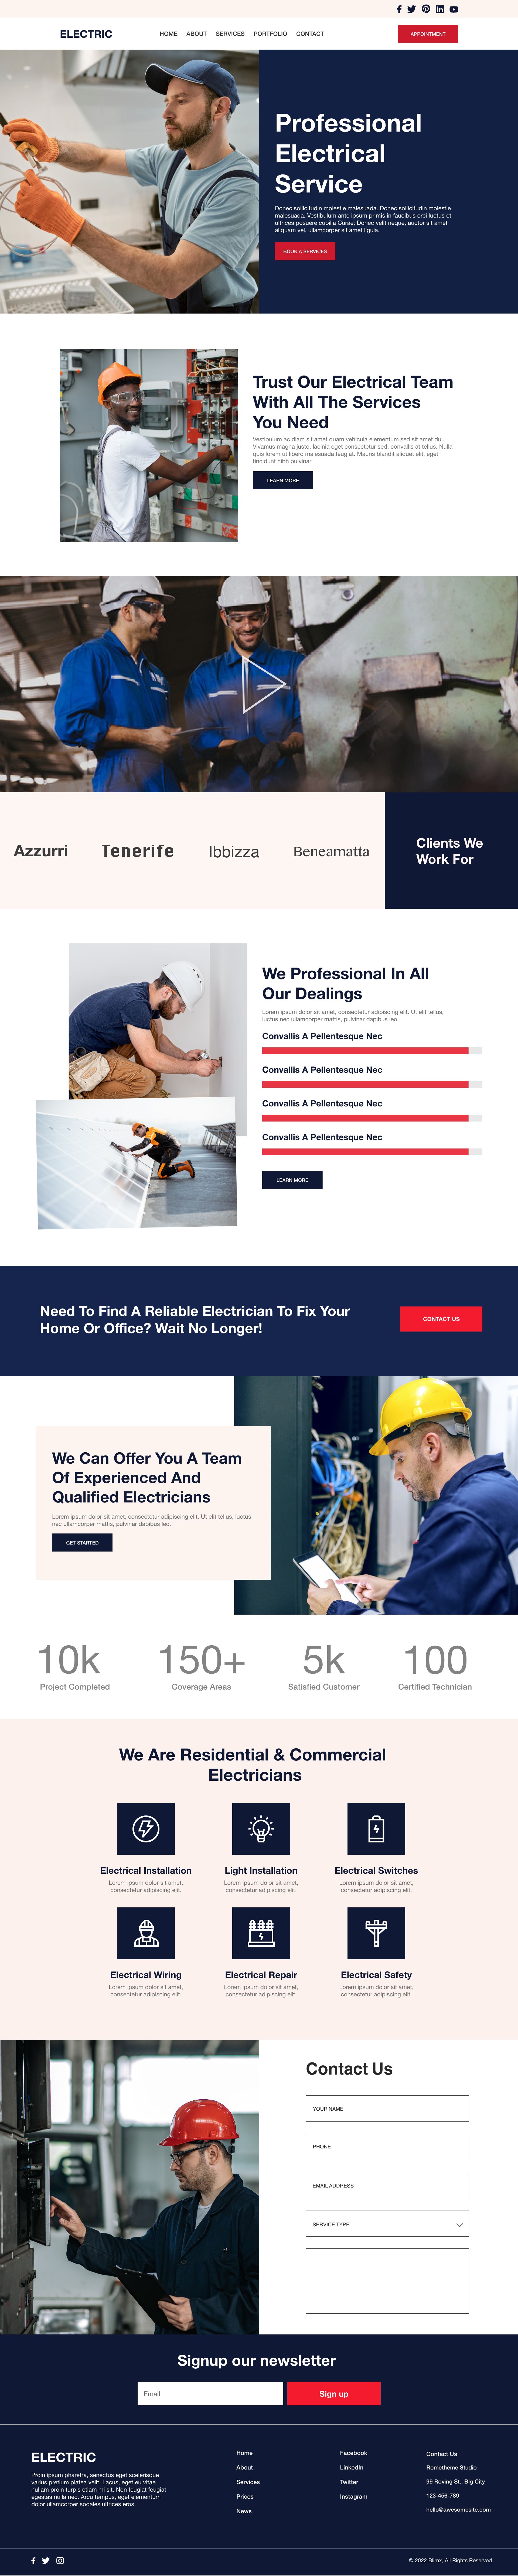 Electrical Services Website Design